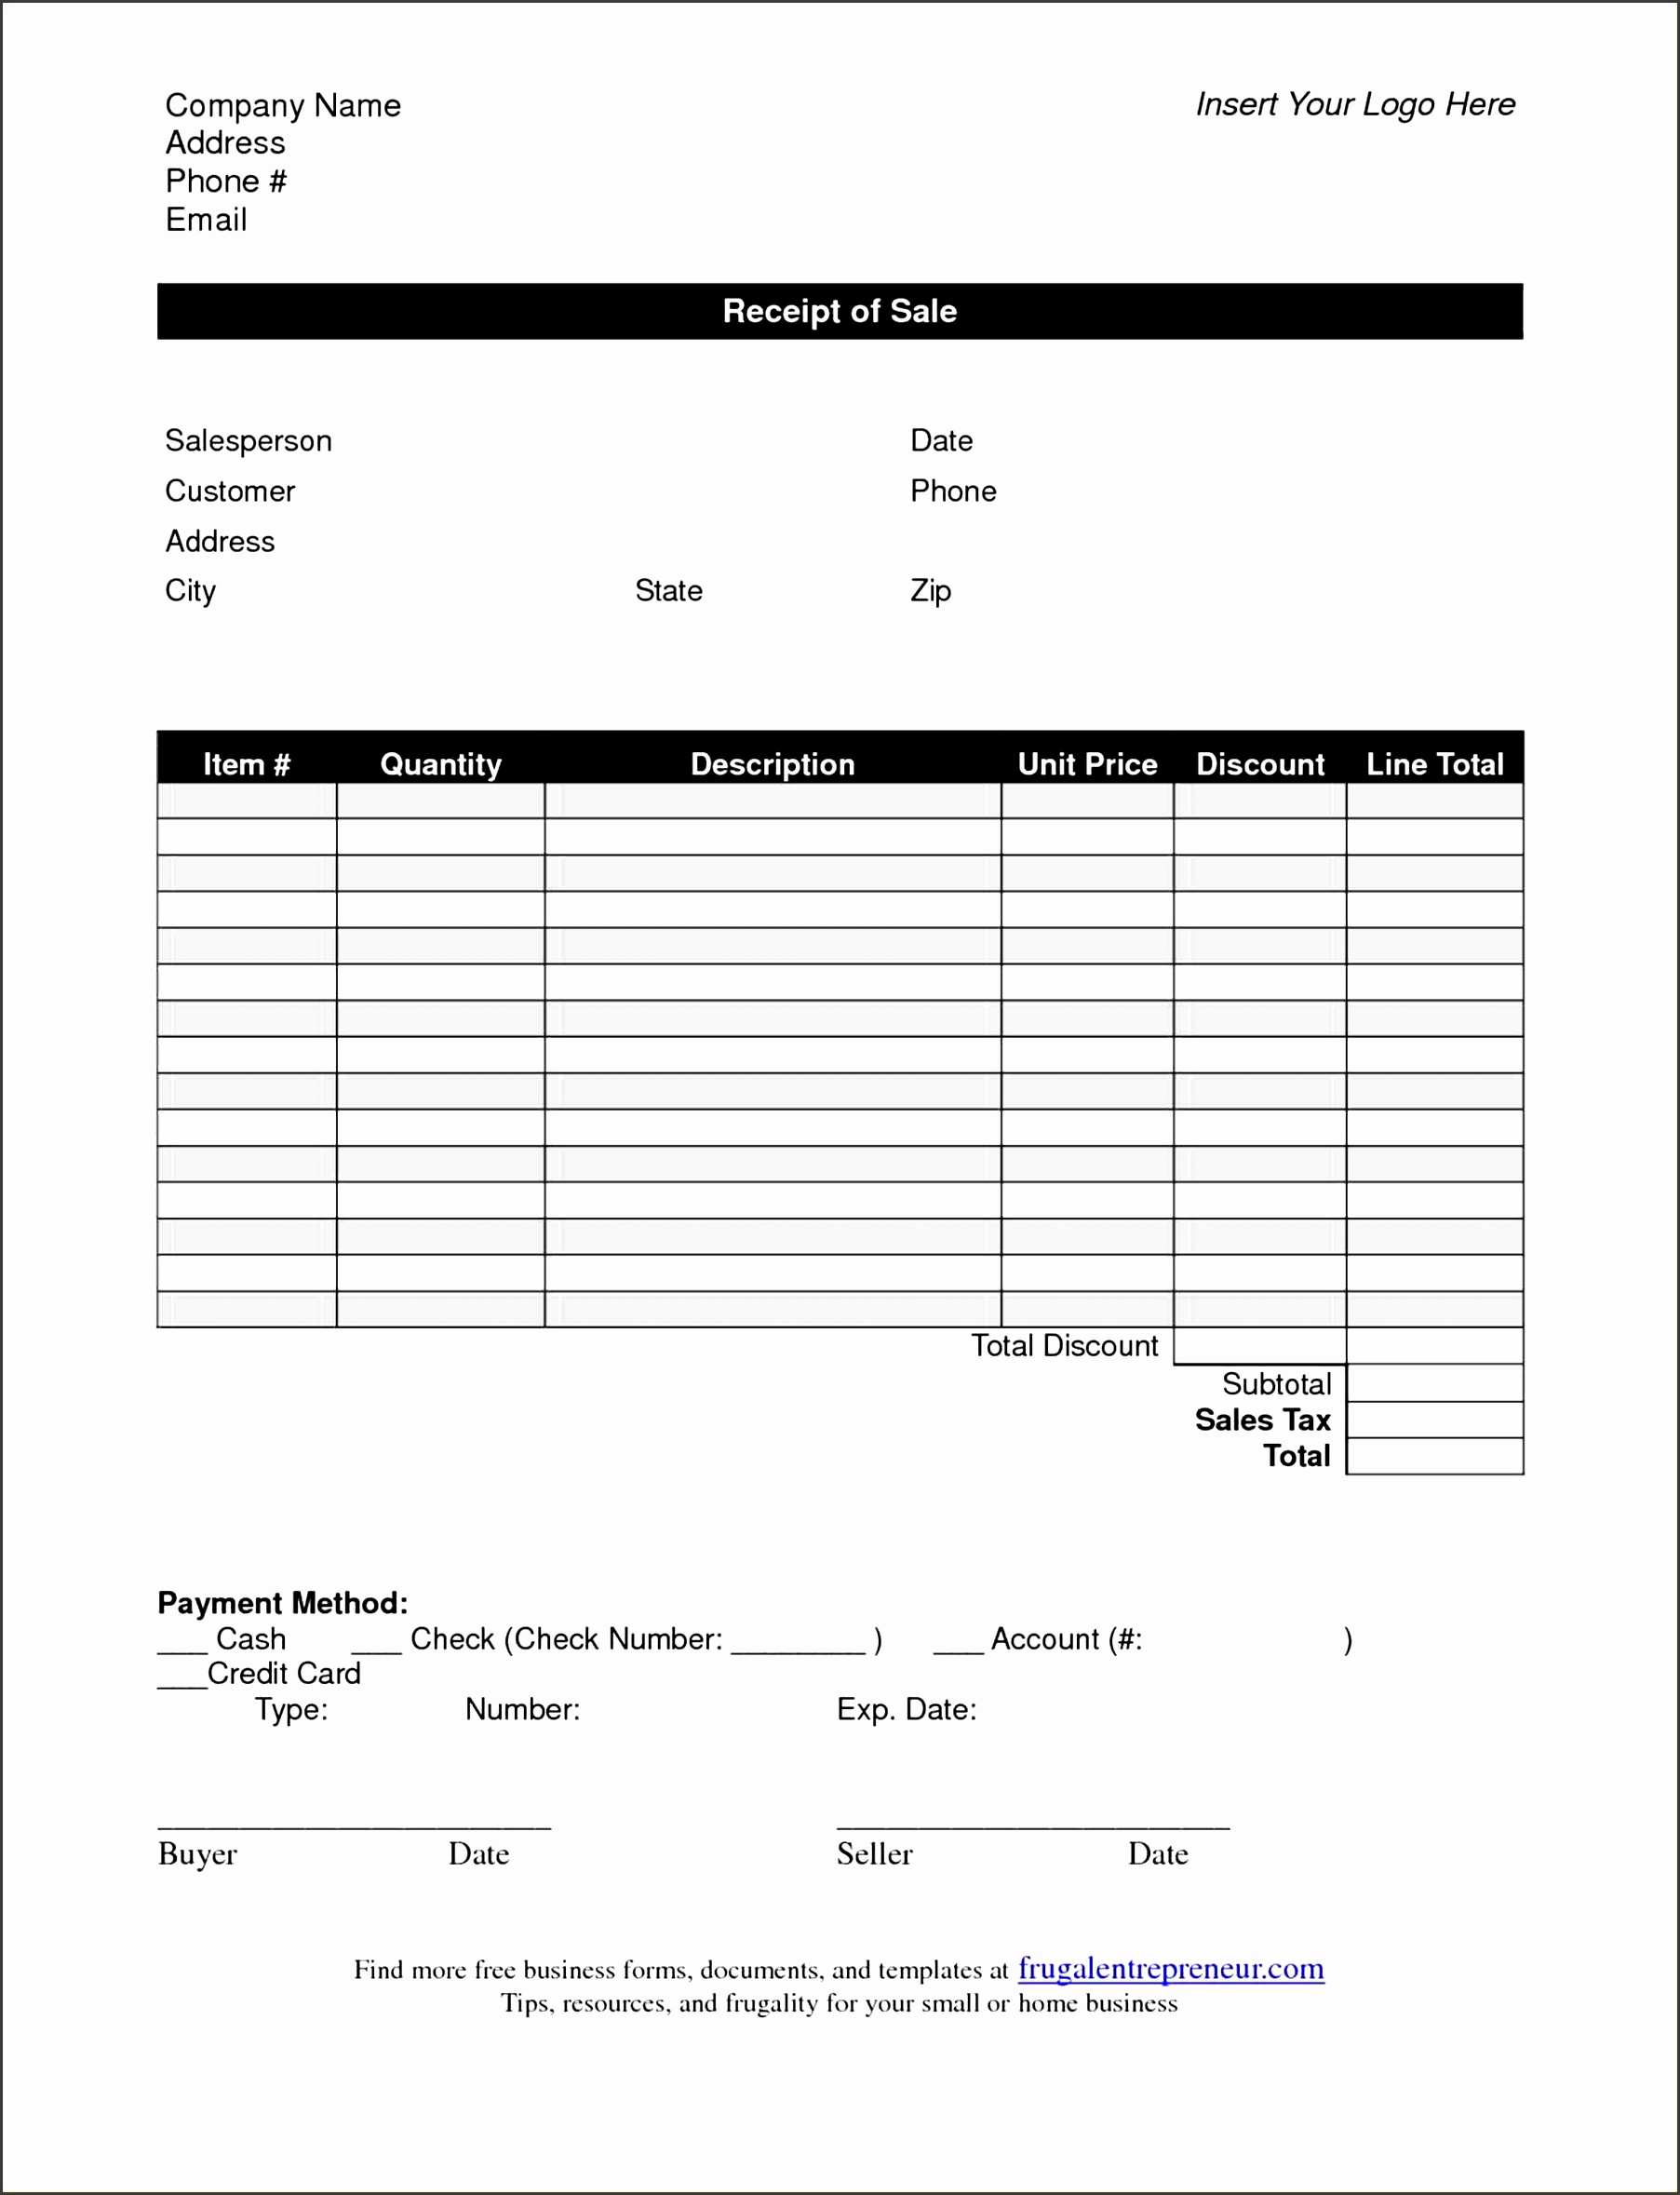 10-blank-invoice-template-for-sales-sampletemplatess-sampletemplatess